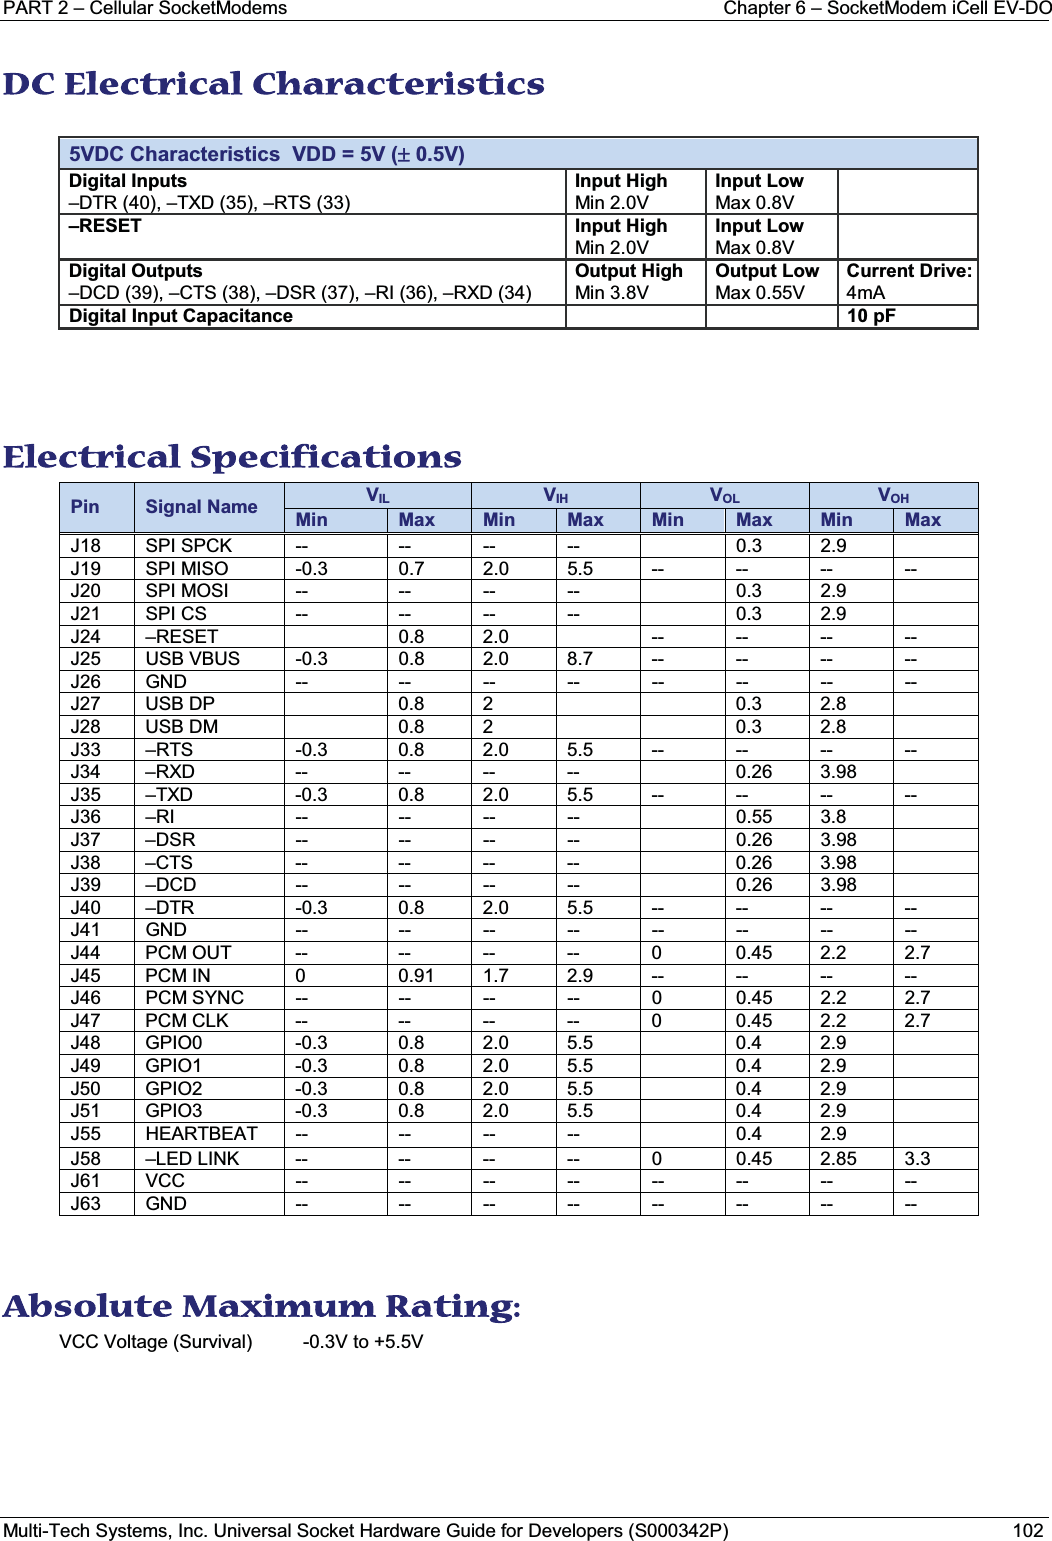 PART 2 – Cellular SocketModems Chapter 6 – SocketModem iCell EV-DOMulti-Tech Systems, Inc. Universal Socket Hardware Guide for Developers (S000342P) 102DDC Electrical Characteristics 5VDC Characteristics  VDD = 5V (rr0.5V)Digital Inputs–DTR (40), –TXD (35), –RTS (33)Input HighMin 2.0VInput LowMax 0.8V–RESET Input HighMin 2.0VInput LowMax 0.8VDigital Outputs–DCD (39), –CTS (38), –DSR (37), –RI (36), –RXD (34)Output HighMin 3.8VOutput LowMax 0.55VCurrent Drive:4mADigital Input Capacitance 10 pFElectrical Specifications  Pin Signal Name VIL VIH VOL VOHMin Max Min Max Min Max Min MaxJ18 SPI SPCK -- -- -- -- 0.3 2.9J19 SPI MISO -0.3 0.7 2.0 5.5 -- -- -- --J20 SPI MOSI -- -- -- -- 0.3 2.9J21 SPI CS -- -- -- -- 0.3 2.9J24 –RESET 0.8 2.0 -- -- -- --J25 USB VBUS -0.3 0.8 2.0 8.7 -- -- -- --J26 GND -- -- -- -- -- -- -- --J27 USB DP 0.8 2 0.3 2.8J28 USB DM 0.8 2 0.3 2.8J33 –RTS -0.3 0.8 2.0 5.5 -- -- -- --J34 –RXD -- -- -- -- 0.26 3.98J35 –TXD -0.3 0.8 2.0 5.5 -- -- -- --J36 –RI -- -- -- -- 0.55 3.8J37 –DSR -- -- -- -- 0.26 3.98J38 –CTS -- -- -- -- 0.26 3.98J39 –DCD -- -- -- -- 0.26 3.98J40 –DTR -0.3 0.8 2.0 5.5 -- -- -- --J41 GND -- -- -- -- -- -- -- --J44 PCM OUT -- -- -- -- 0 0.45 2.2 2.7J45 PCM IN 0 0.91 1.7 2.9 -- -- -- --J46 PCM SYNC -- -- -- -- 0 0.45 2.2 2.7J47 PCM CLK -- -- -- -- 0 0.45 2.2 2.7J48 GPIO0 -0.3 0.8 2.0 5.5 0.4 2.9J49 GPIO1 -0.3 0.8 2.0 5.5 0.4 2.9J50 GPIO2 -0.3 0.8 2.0 5.5 0.4 2.9J51 GPIO3 -0.3 0.8 2.0 5.5 0.4 2.9J55 HEARTBEAT -- -- -- -- 0.4 2.9J58 –LED LINK -- -- -- -- 0 0.45 2.85 3.3J61 VCC -- -- -- -- -- -- -- --J63 GND -- -- -- -- -- -- -- --Absolute Maximum Rating: VCC Voltage (Survival) -0.3V to +5.5V